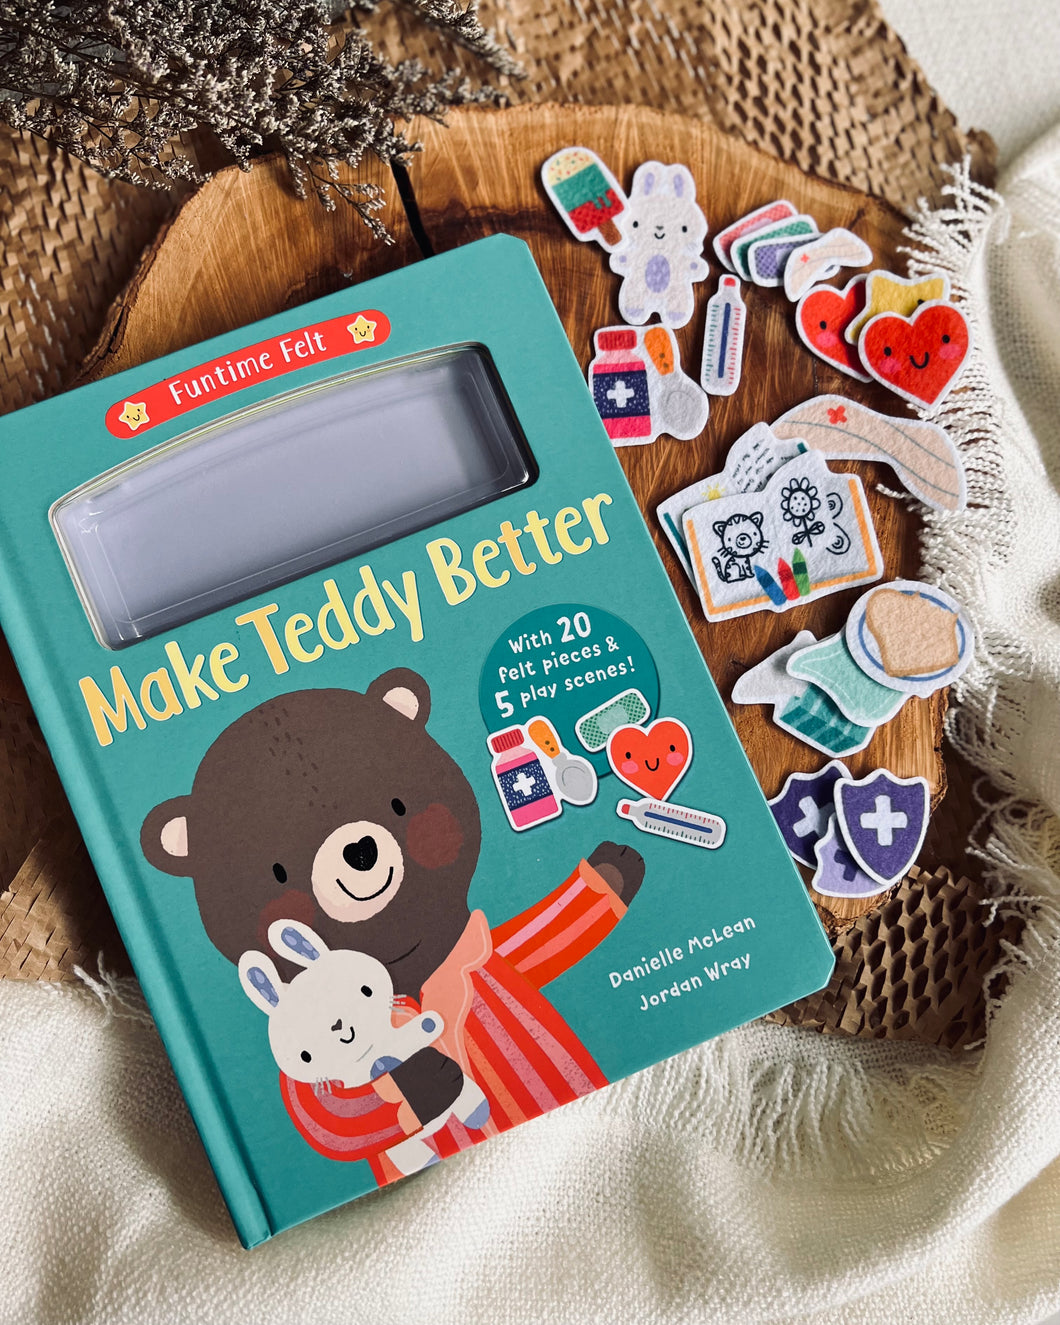 Make Teddy Better (Funtime Felt) - Board book